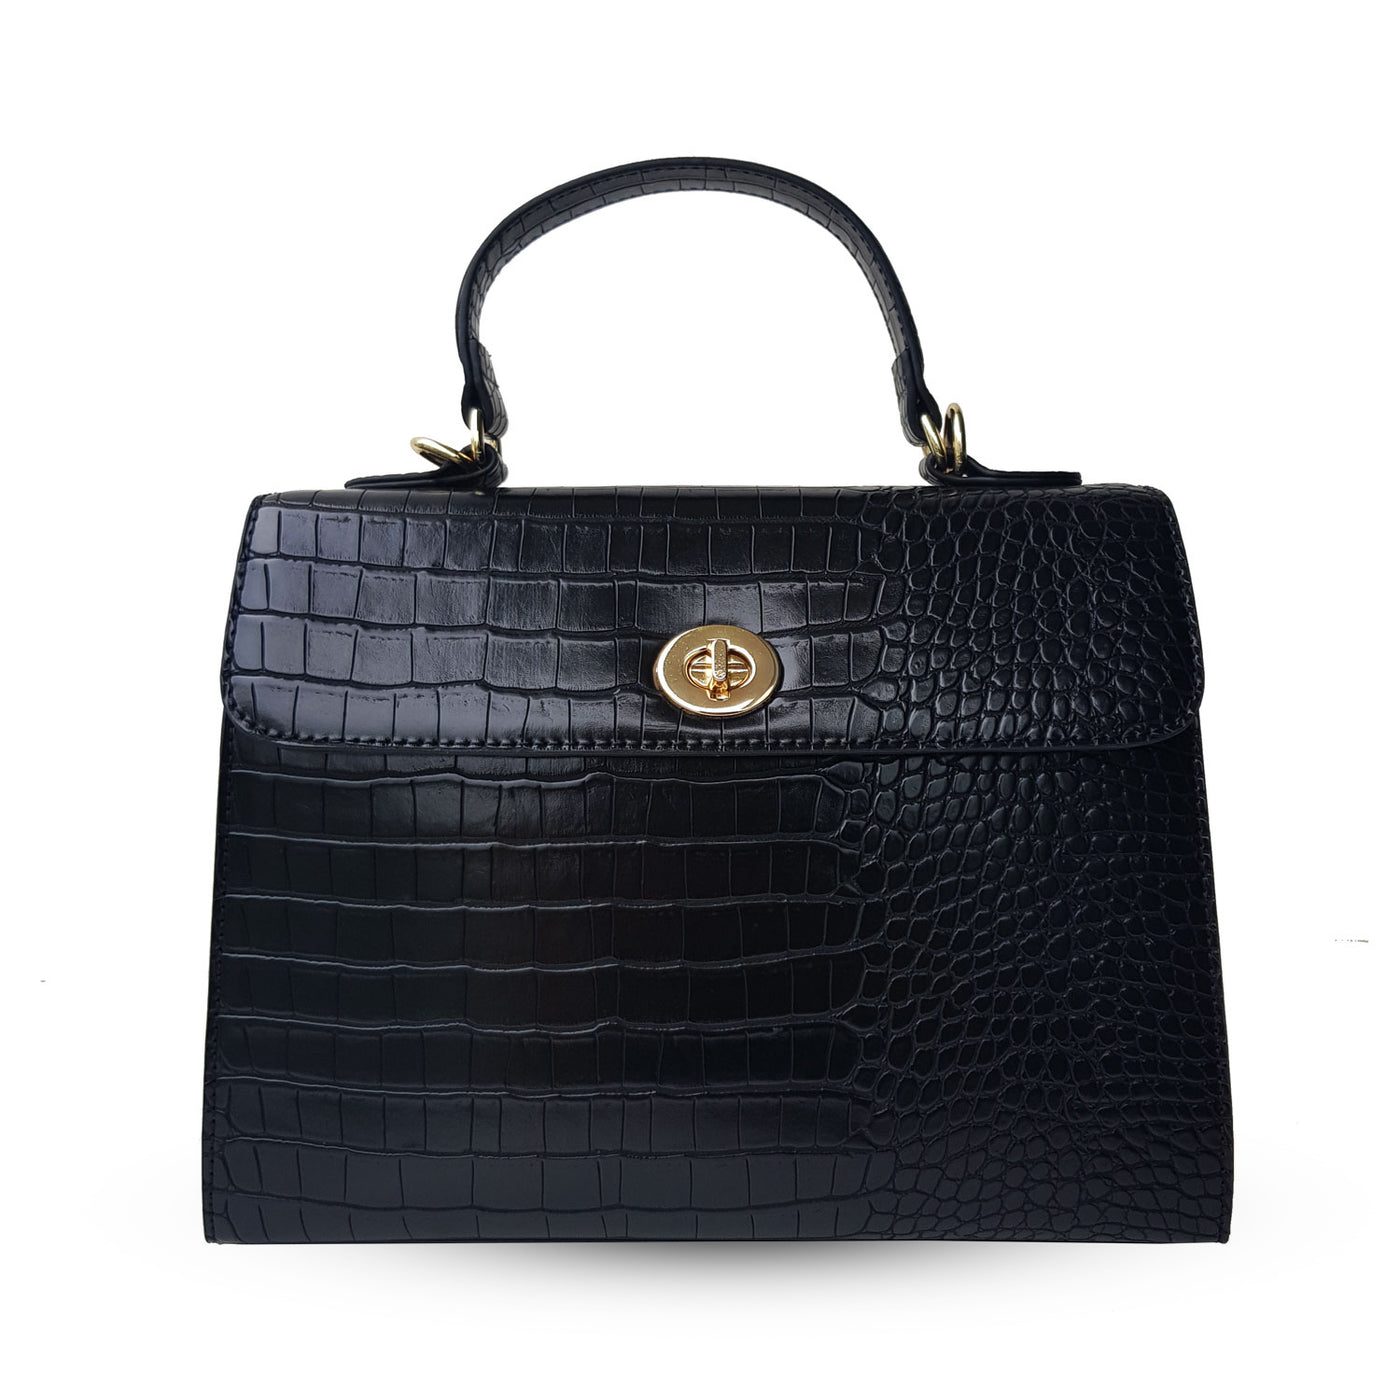 Charlie Stone Vintage Inspired Handbag Retro 1940’s 1950’s Style Noir black Croc Vegan leather